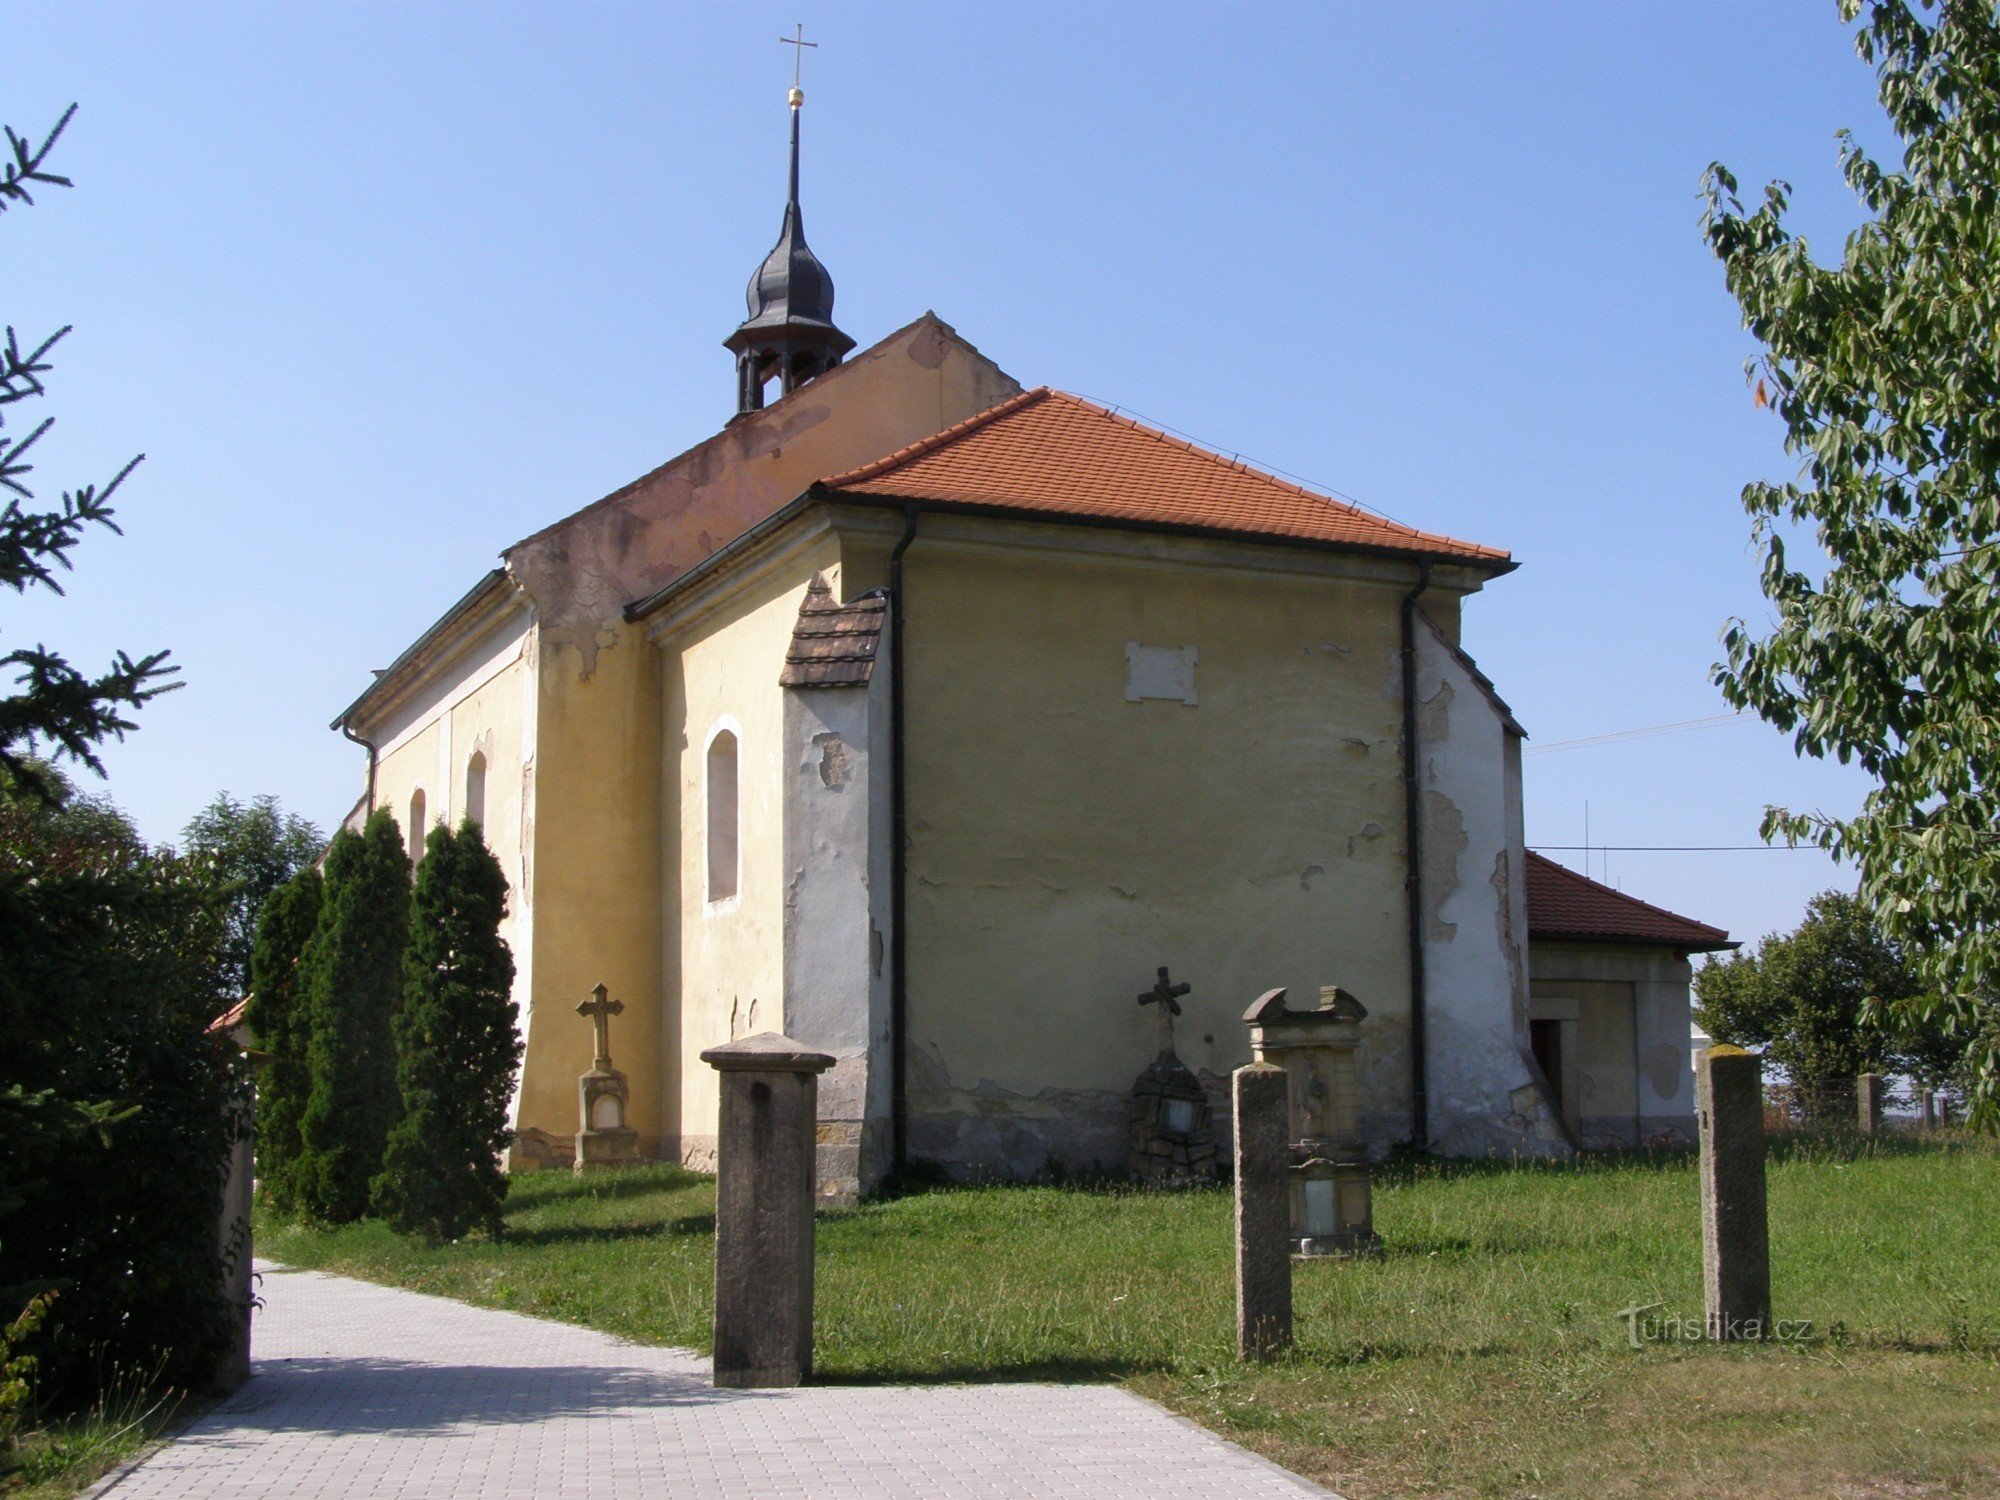 Stará Voda - church of St. Wenceslas